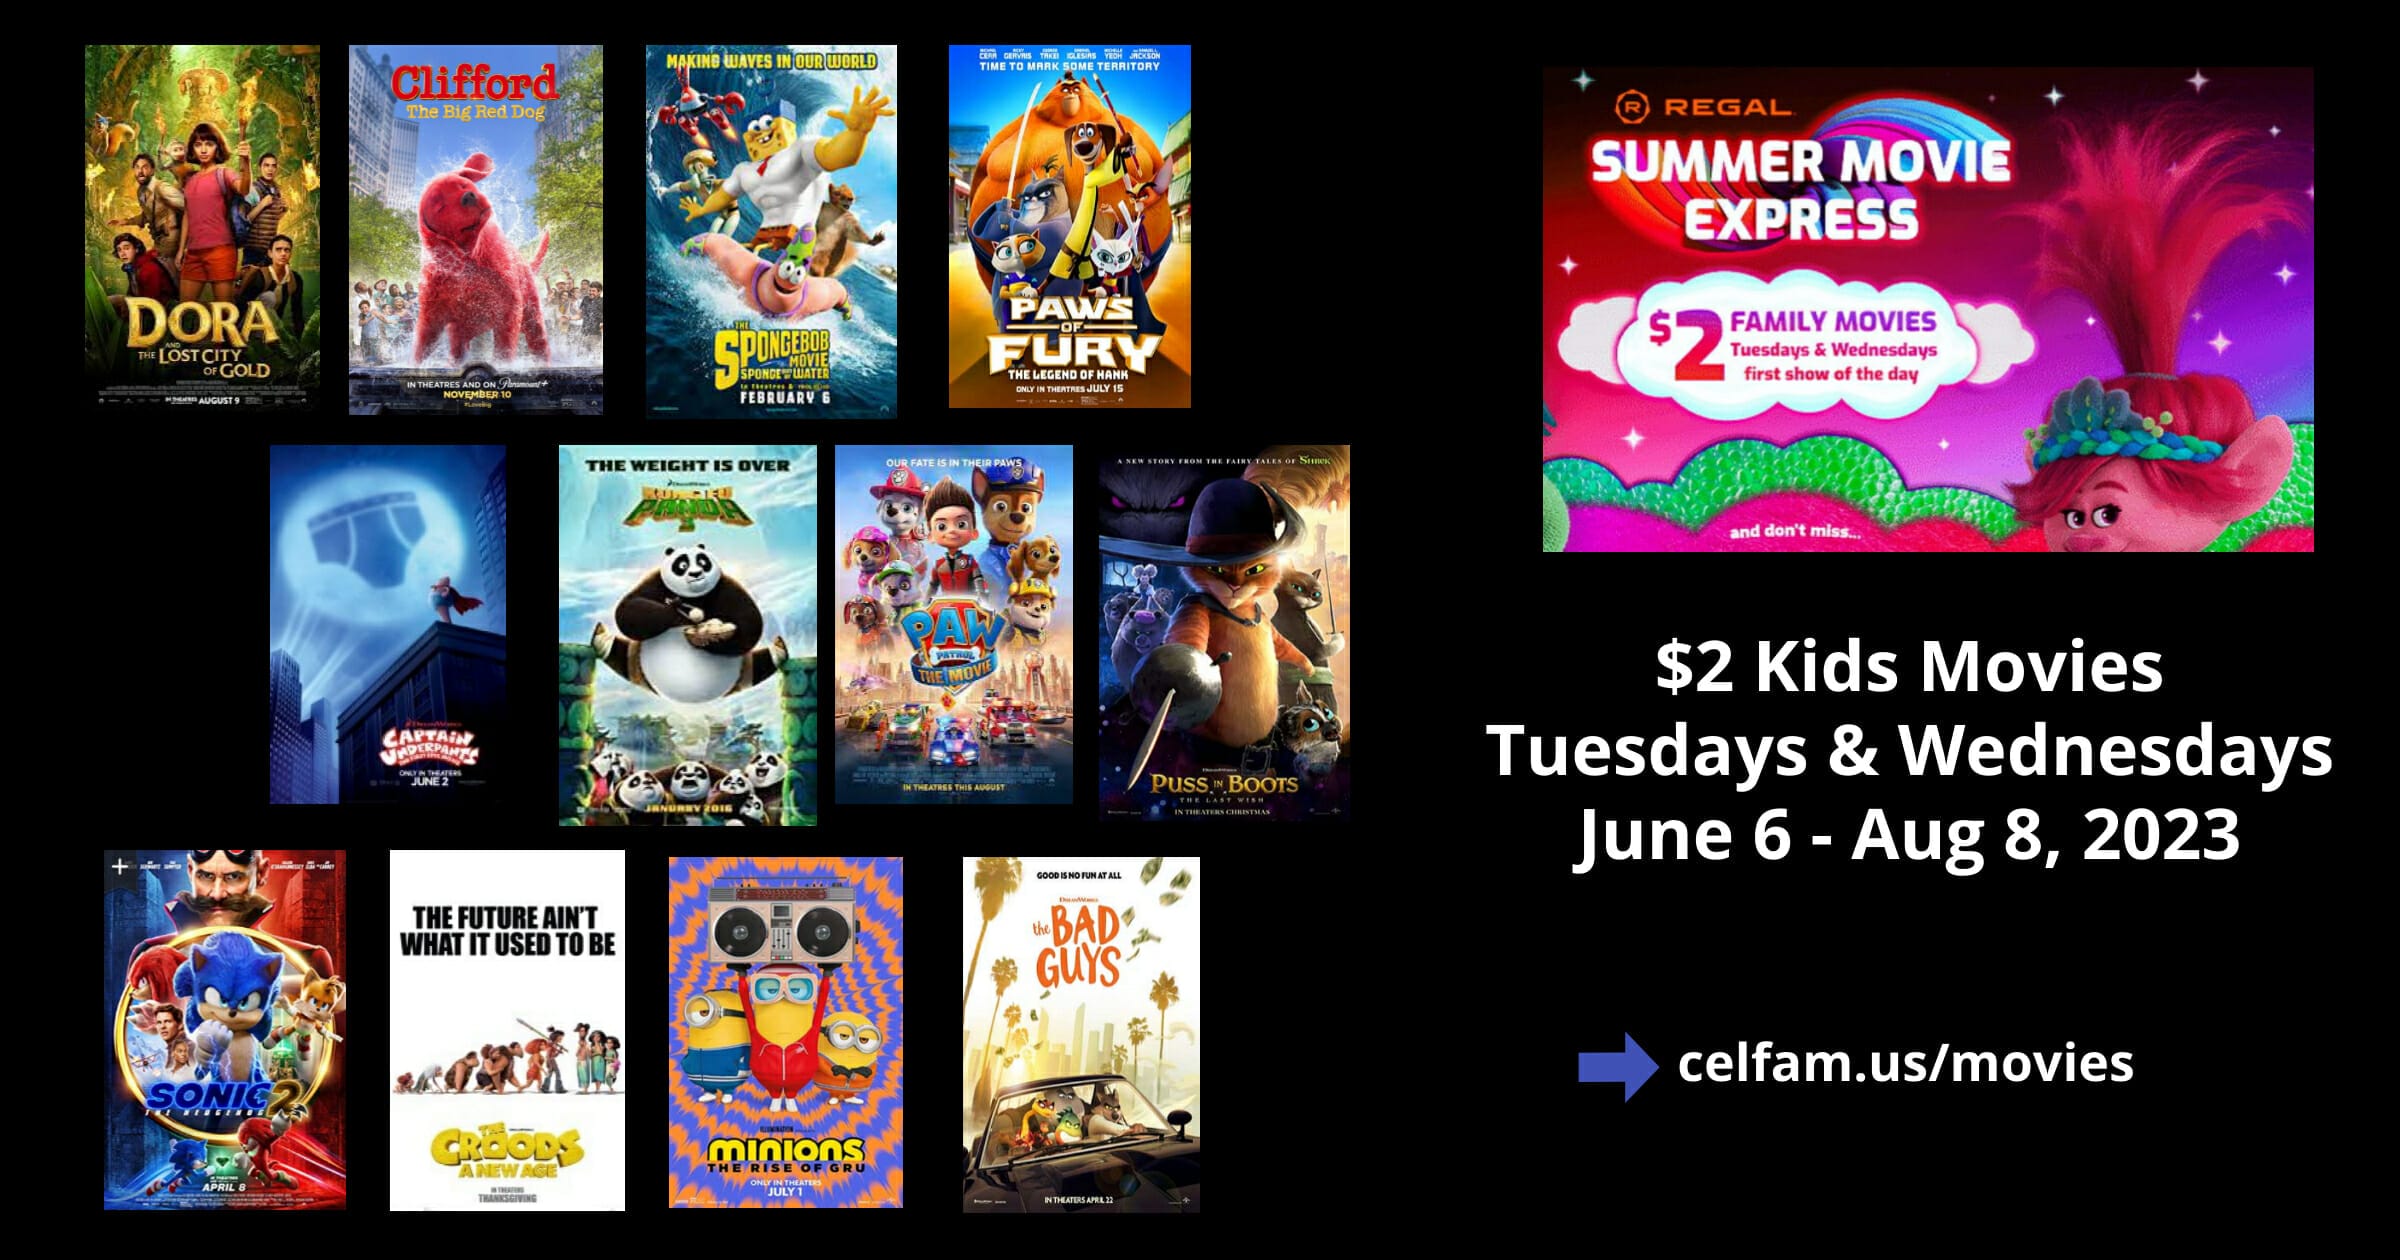 Regal Summer Movie Express 2023 2 Movies Schedule CelebrateFamily.Us